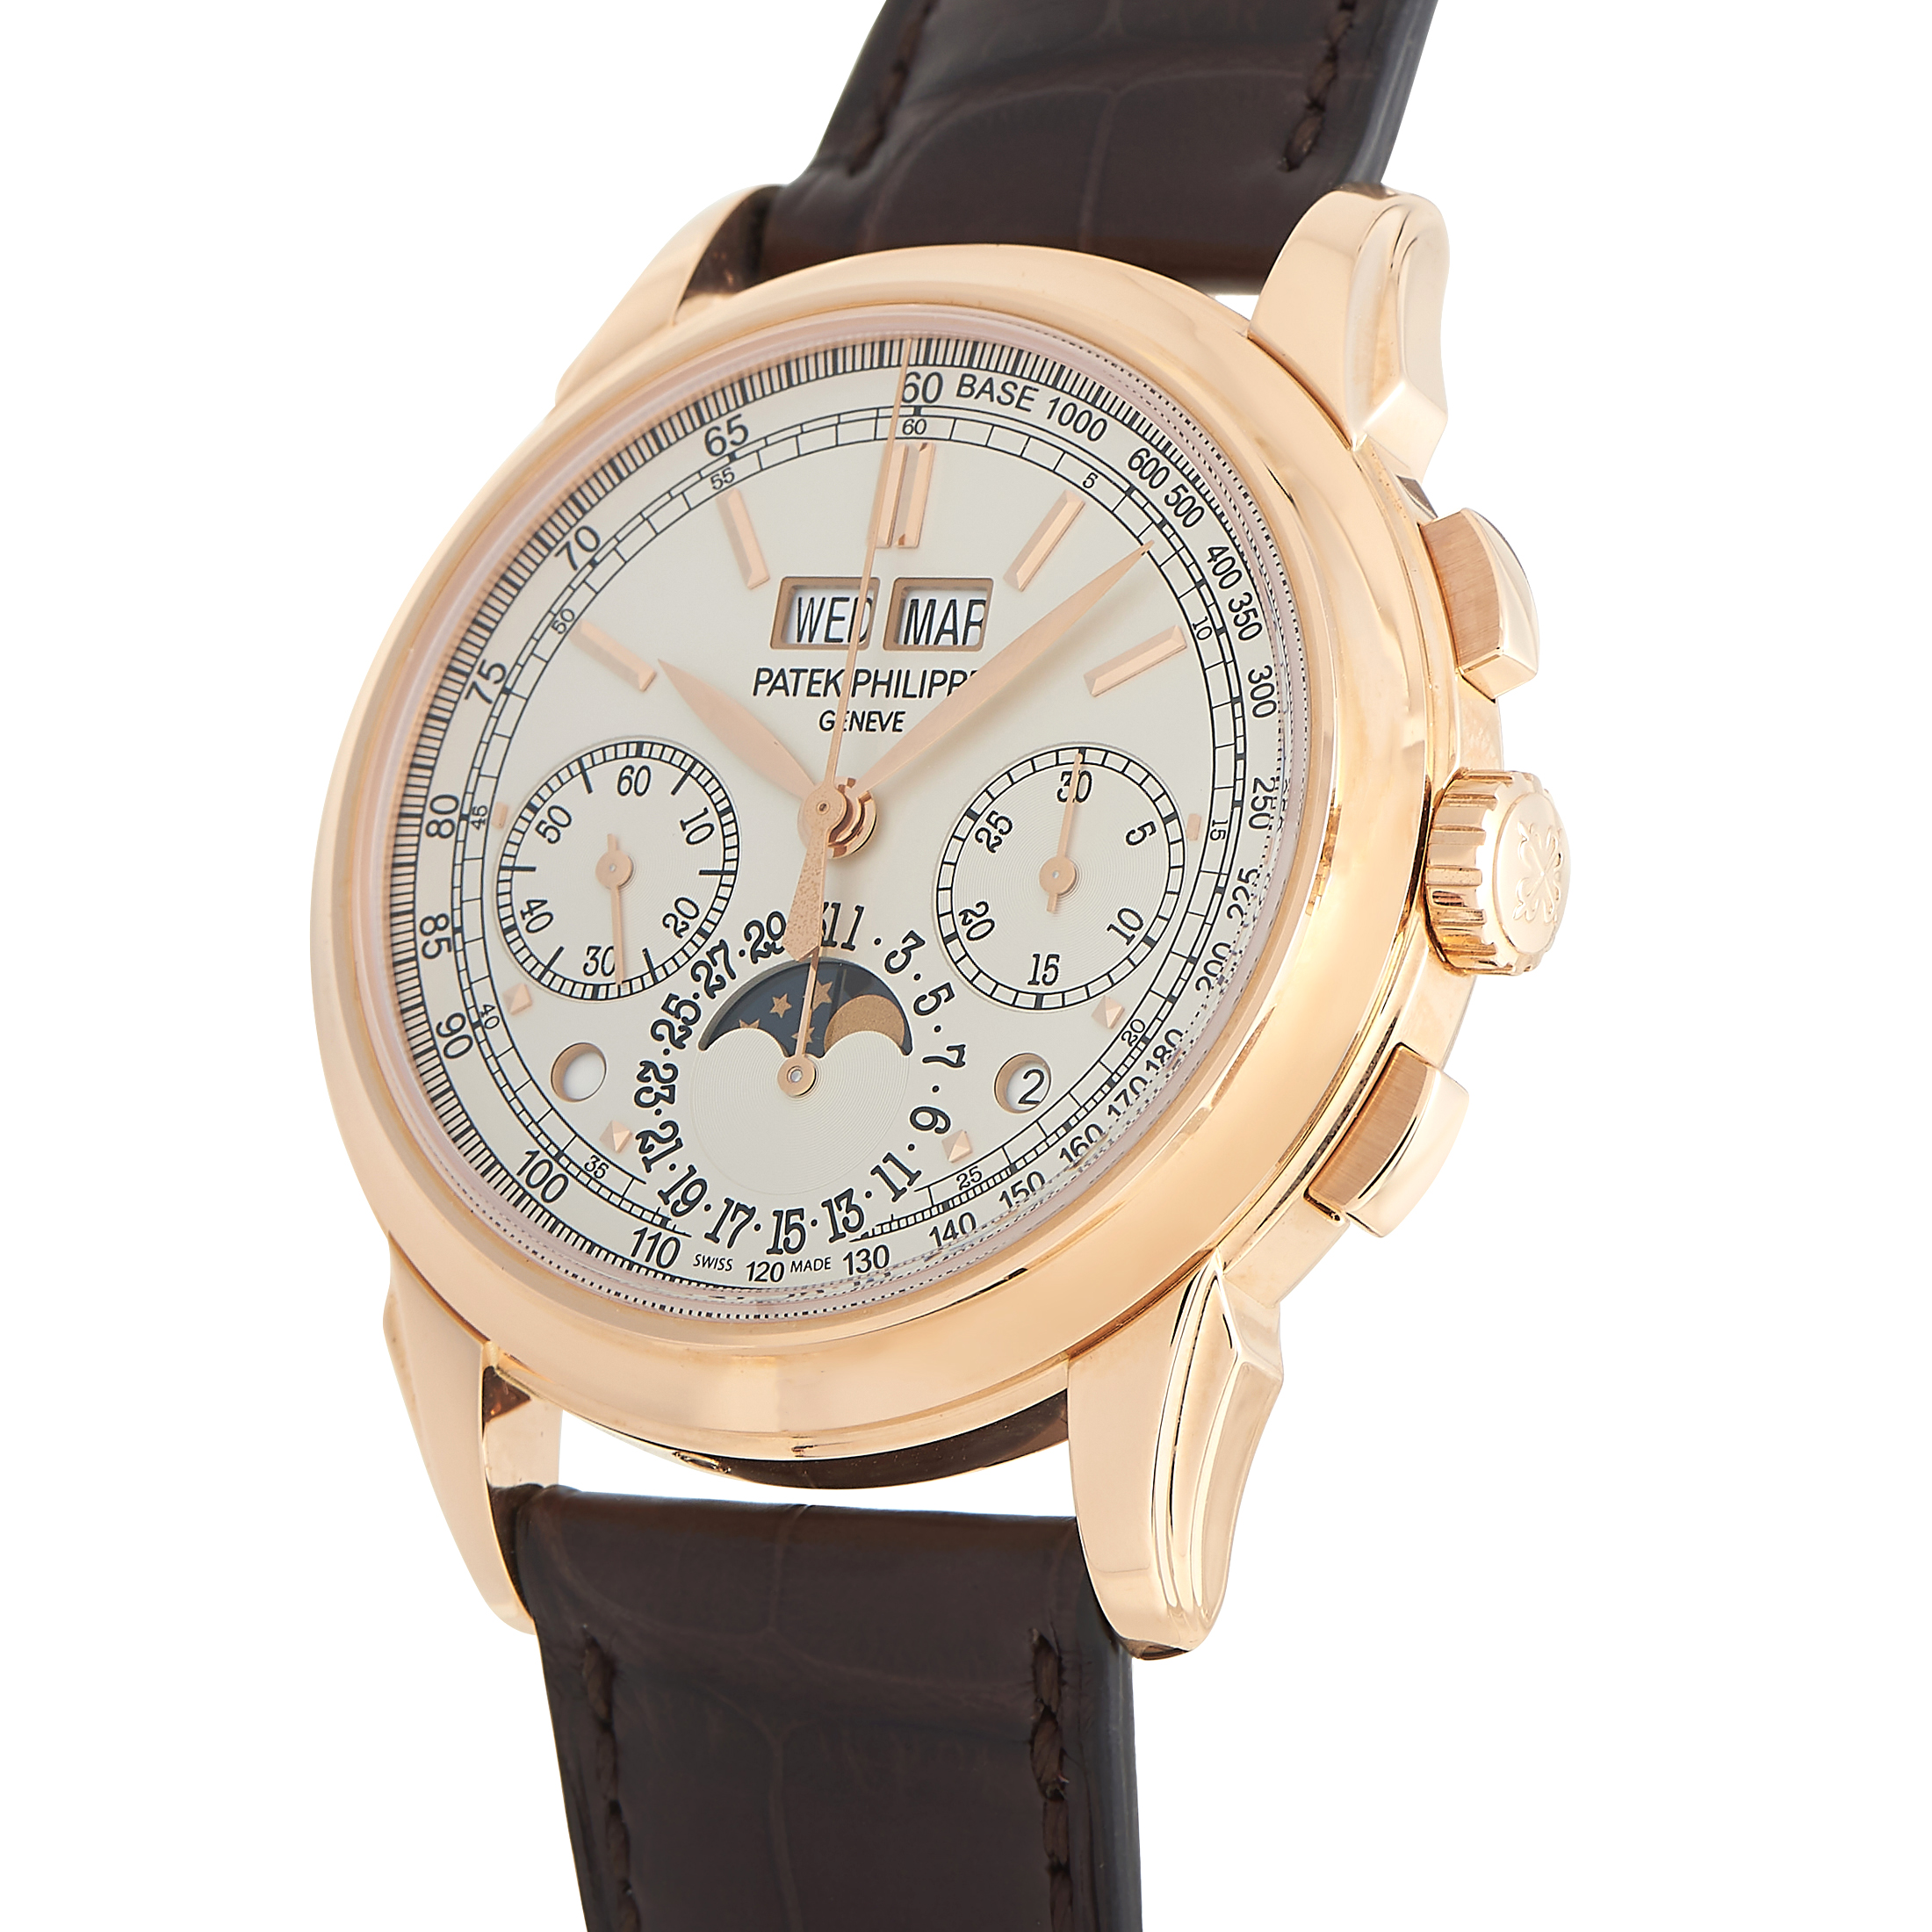 Patek Philippe Grand Complications Perpetual Calendar Chronograph Rose Gold Watch 5270R-001